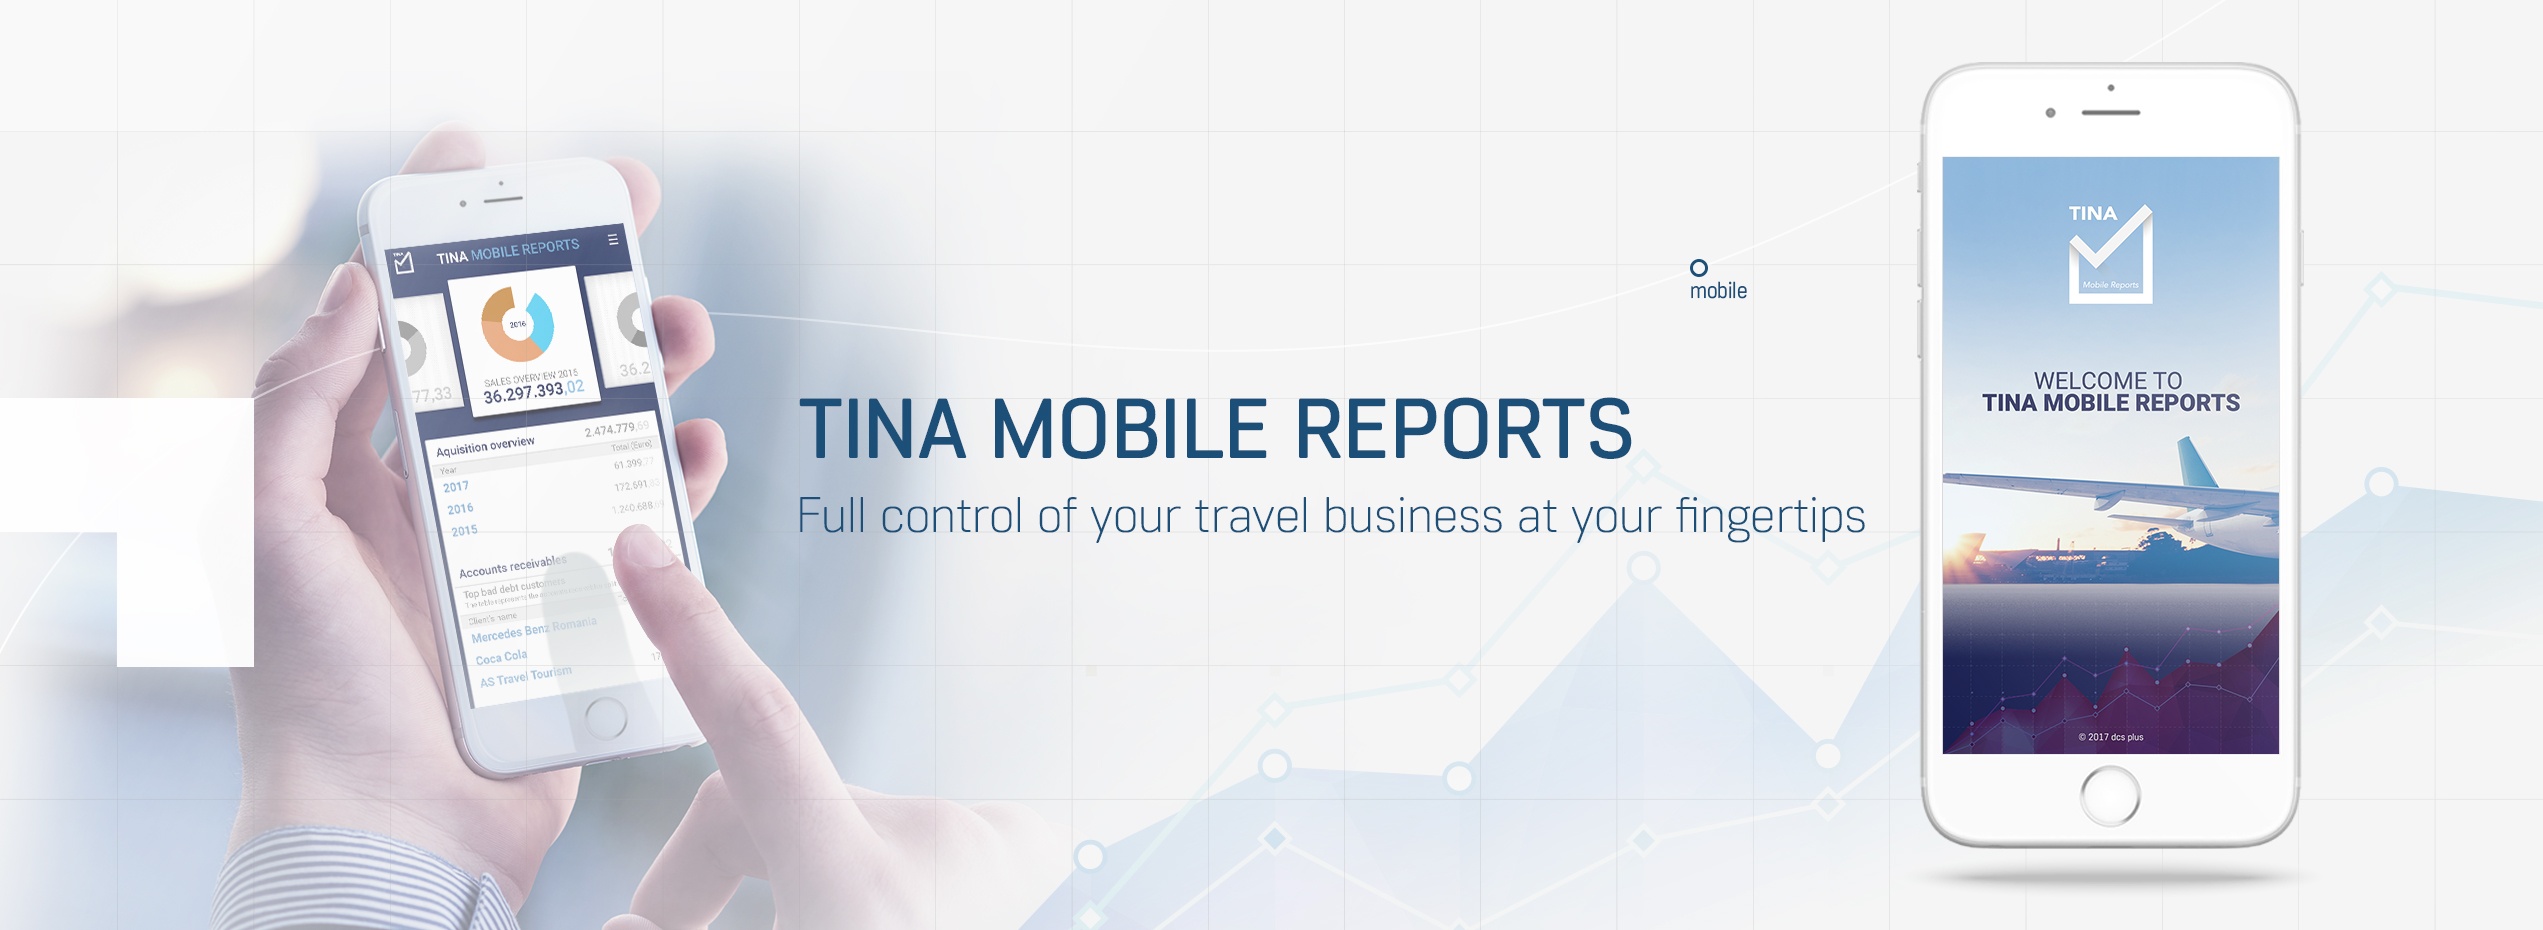 TINA Mobile Reports